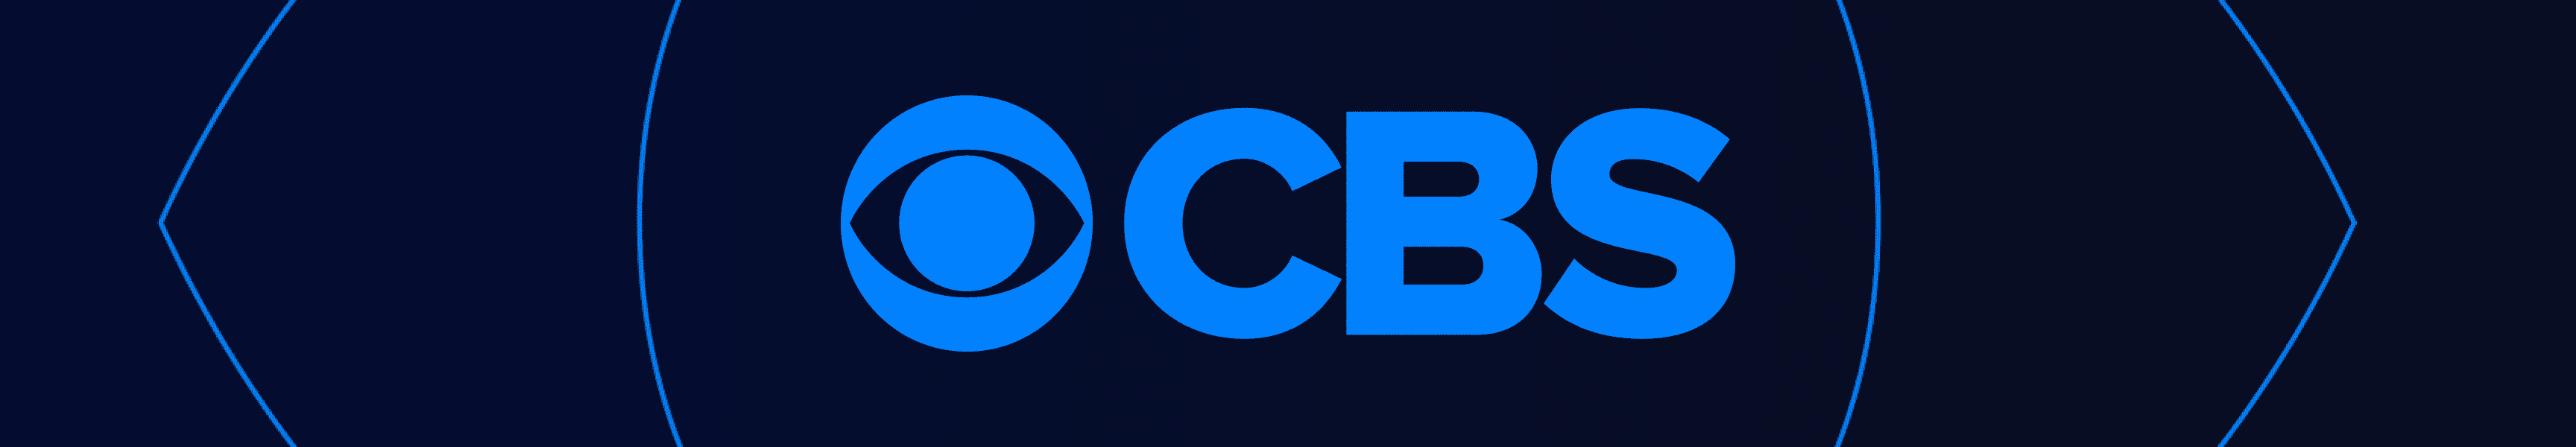 CBS Entertainment Standees